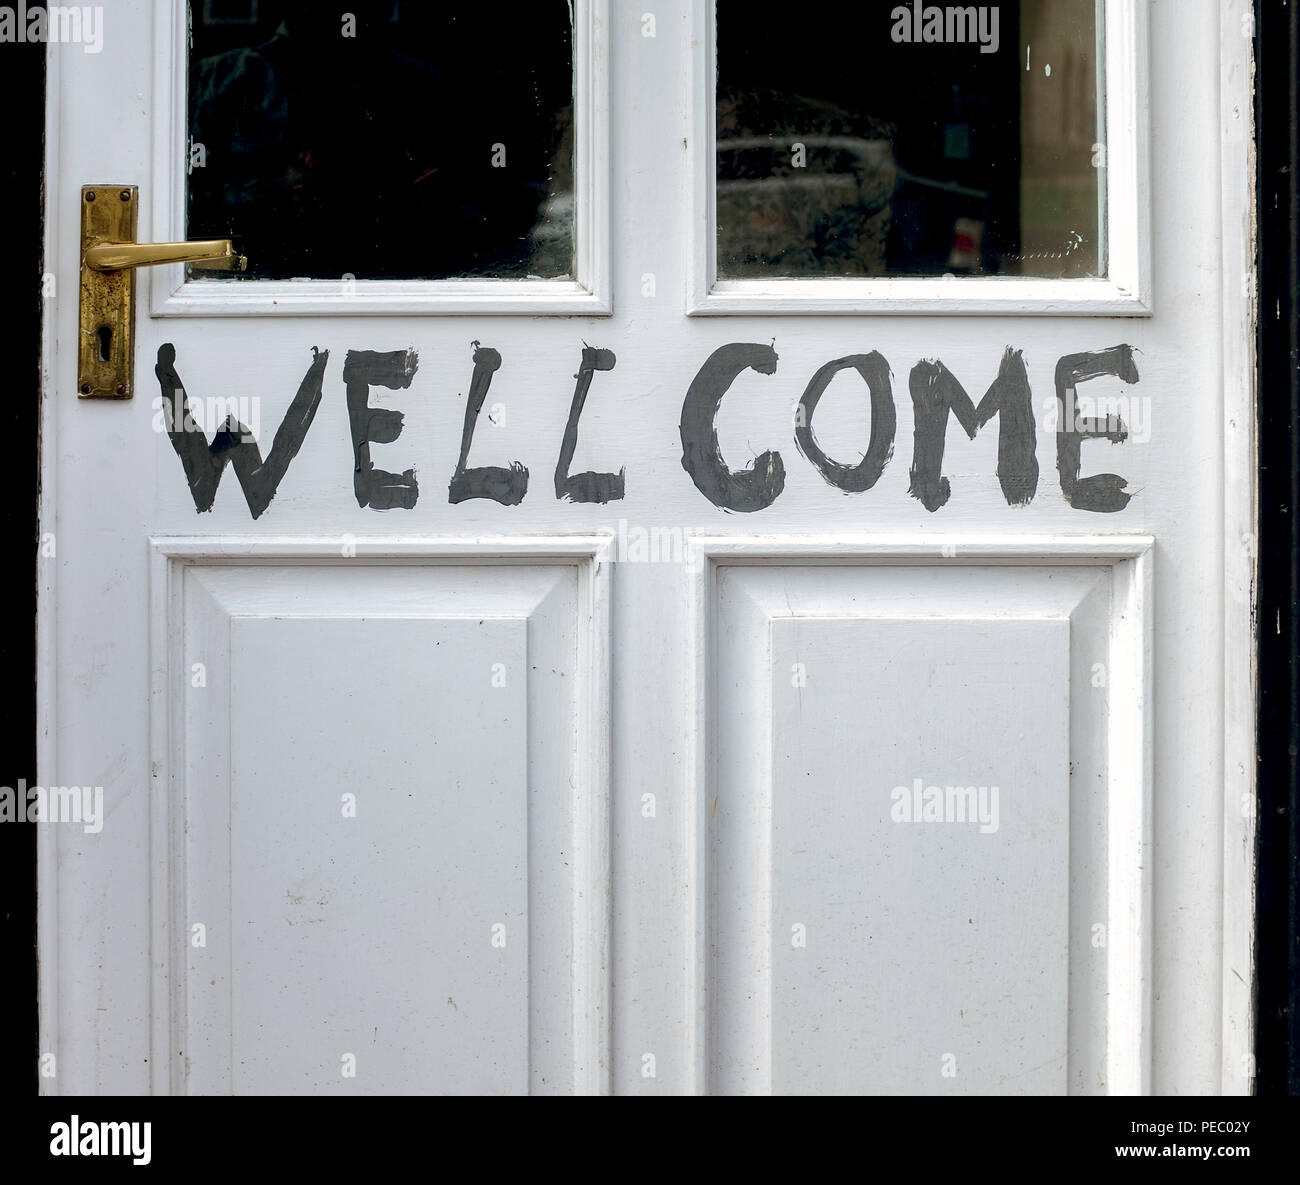 Misspelled shop doorway sign in Appleby-in-Westmorland, Cumbria, England, United Kingdom. Stock Photo